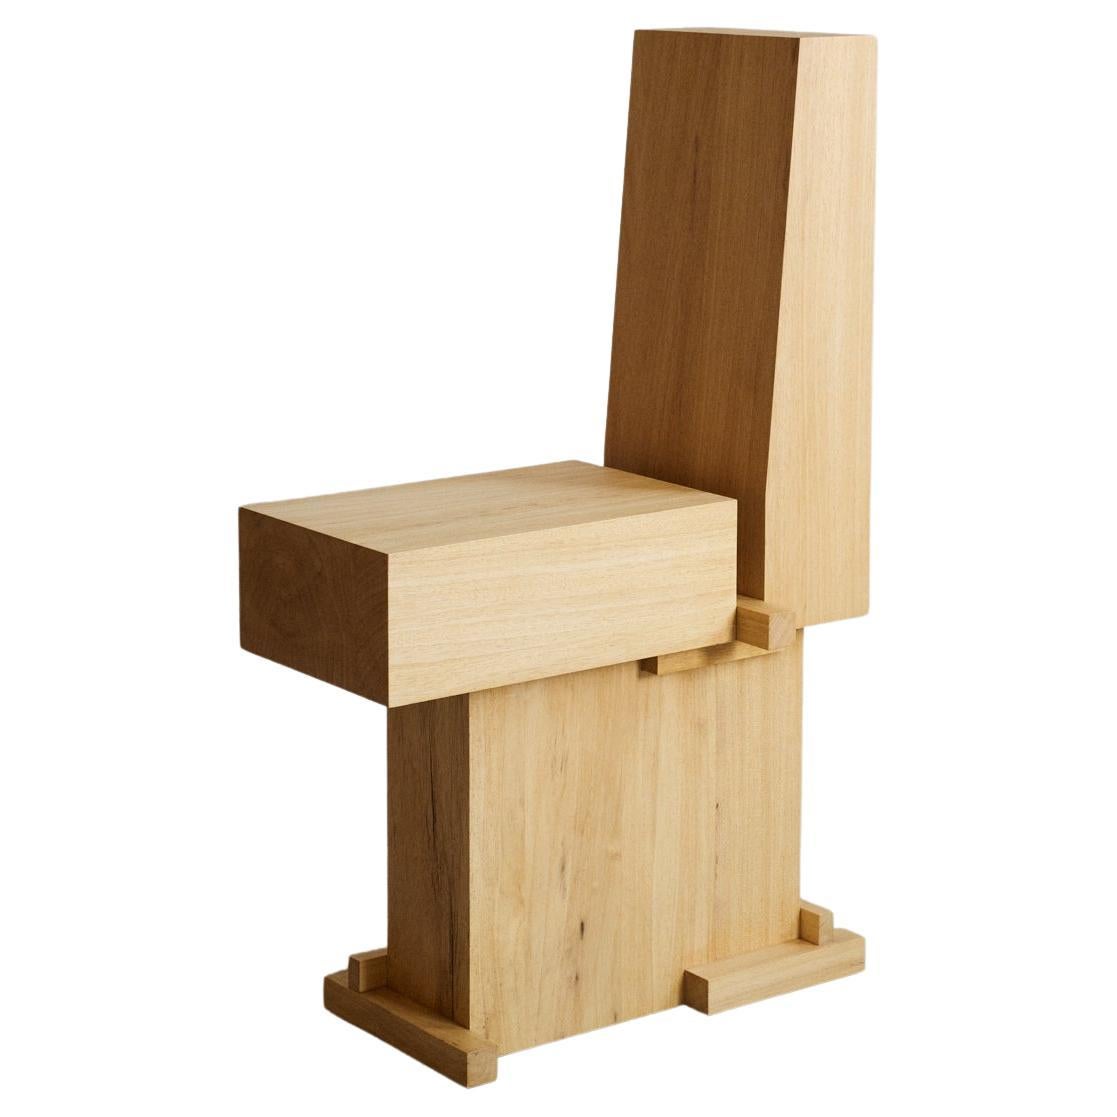 Japanese Minimalist Abachi Wood Sculptural Chair Splint Stool by Sho Ota For Sale